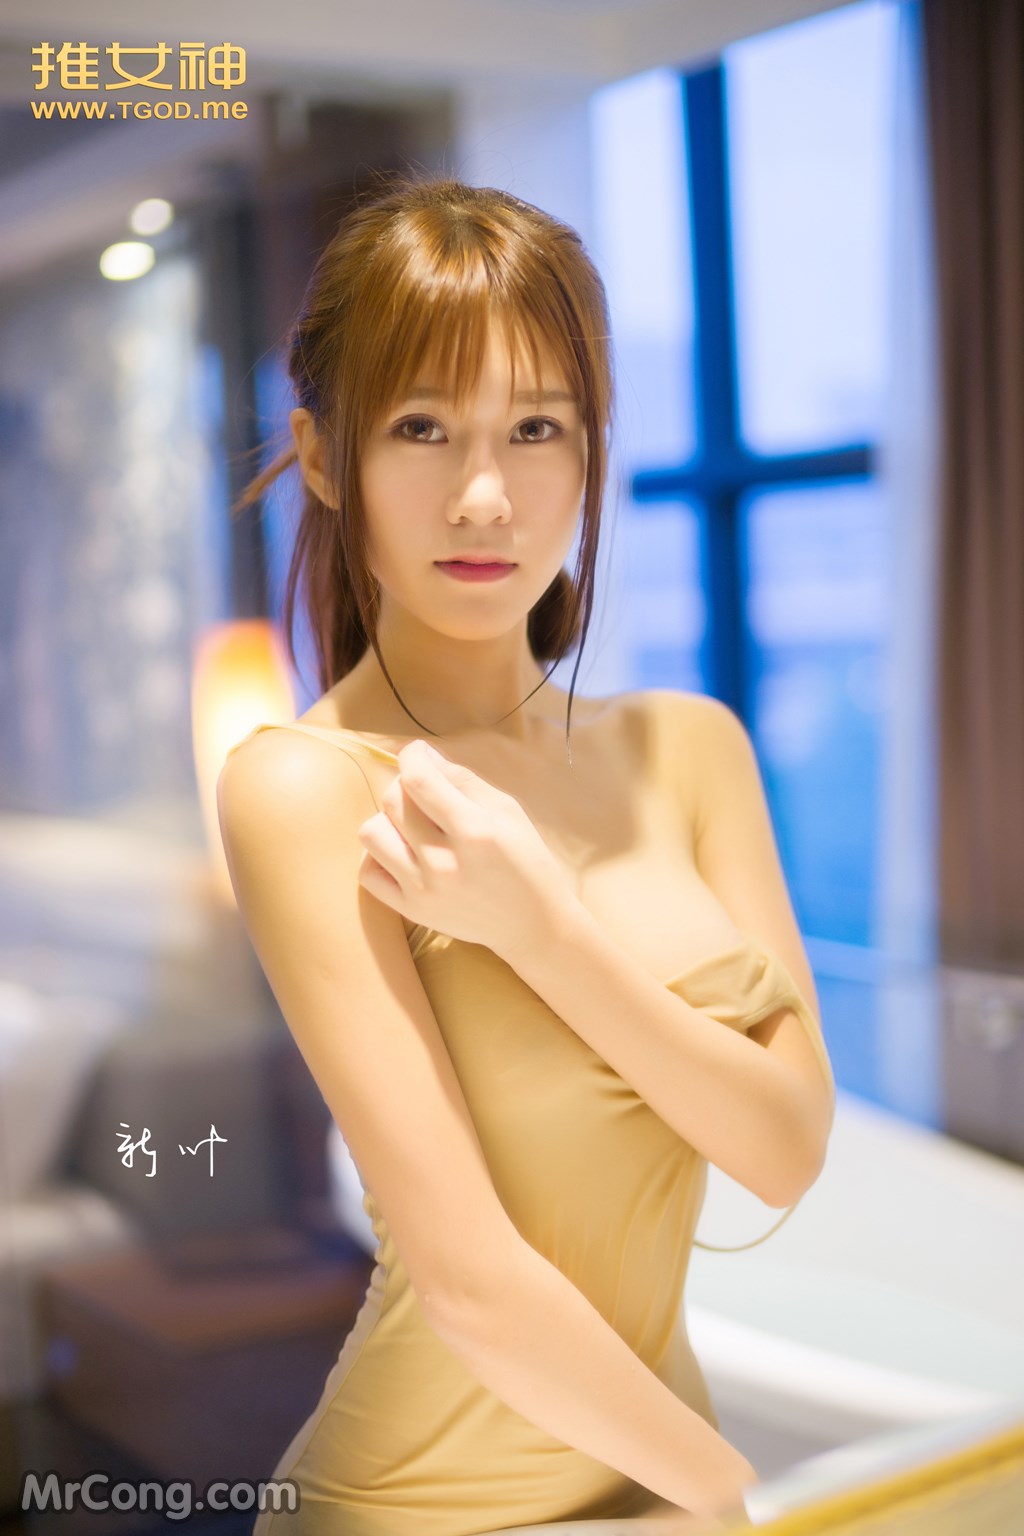 TGOD 2014-11-12: Model Winna (嘉琳) (48 photos)